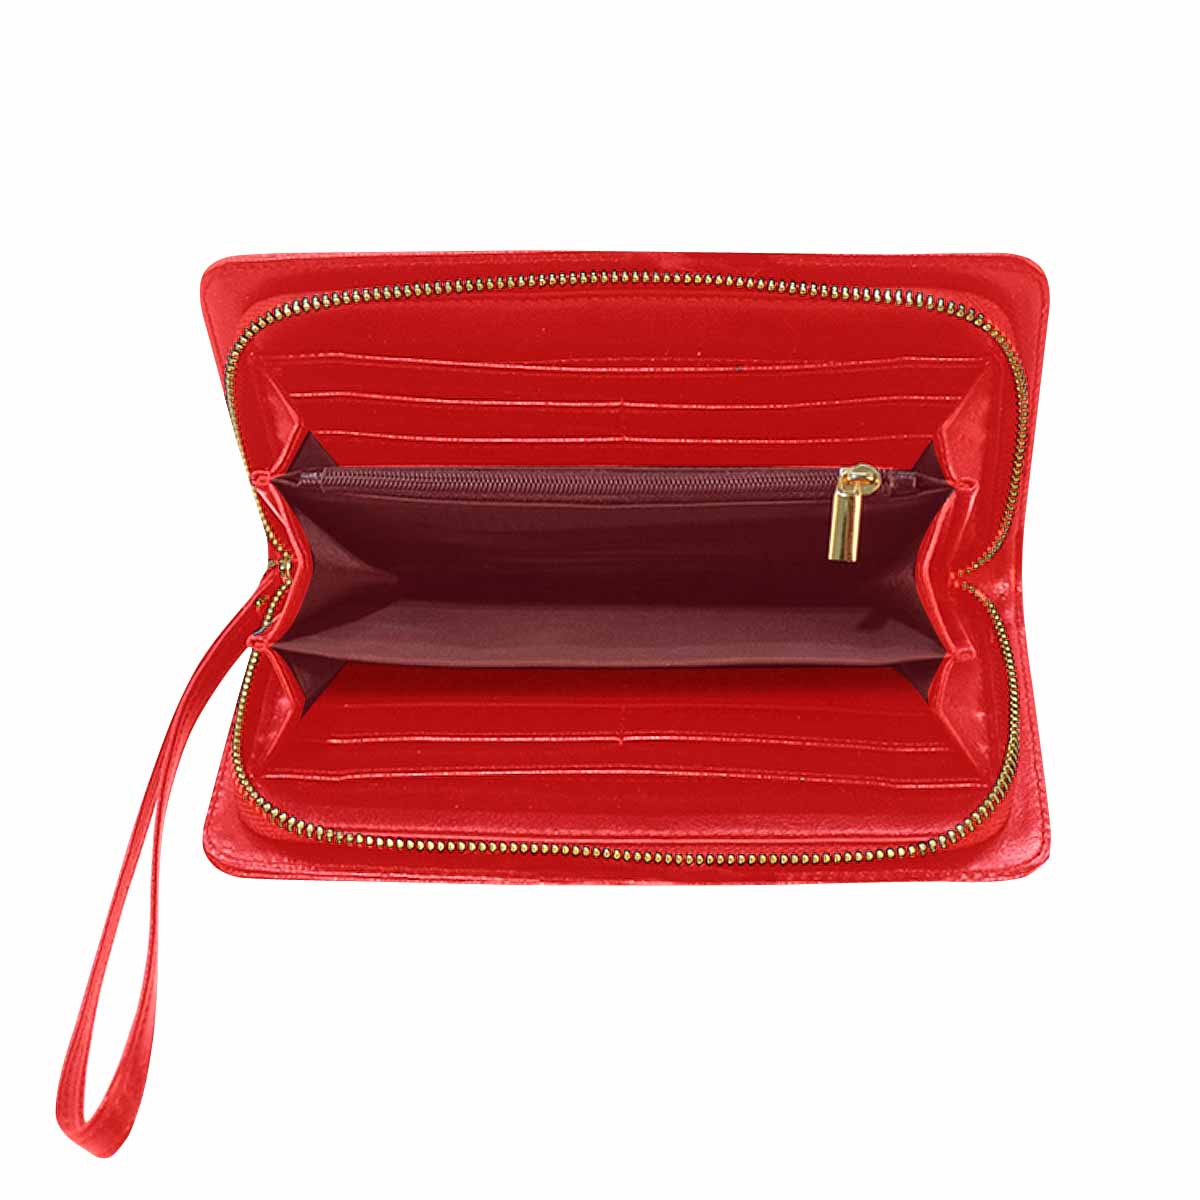 Victorian lace print womens wallet, clutch purse, red trim, design 43